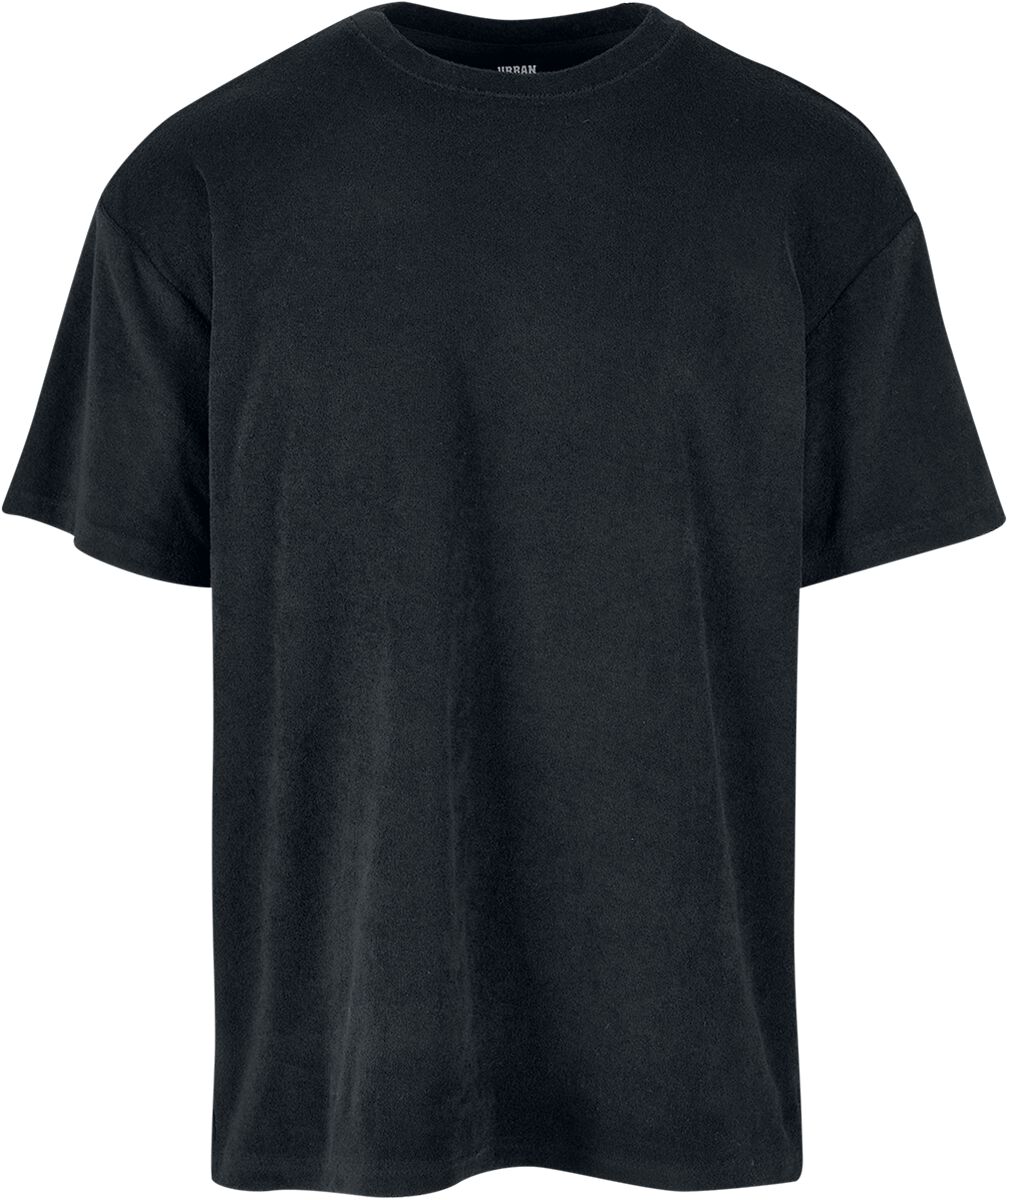 Urban Classics Oversized Towel Tee T-Shirt schwarz in S